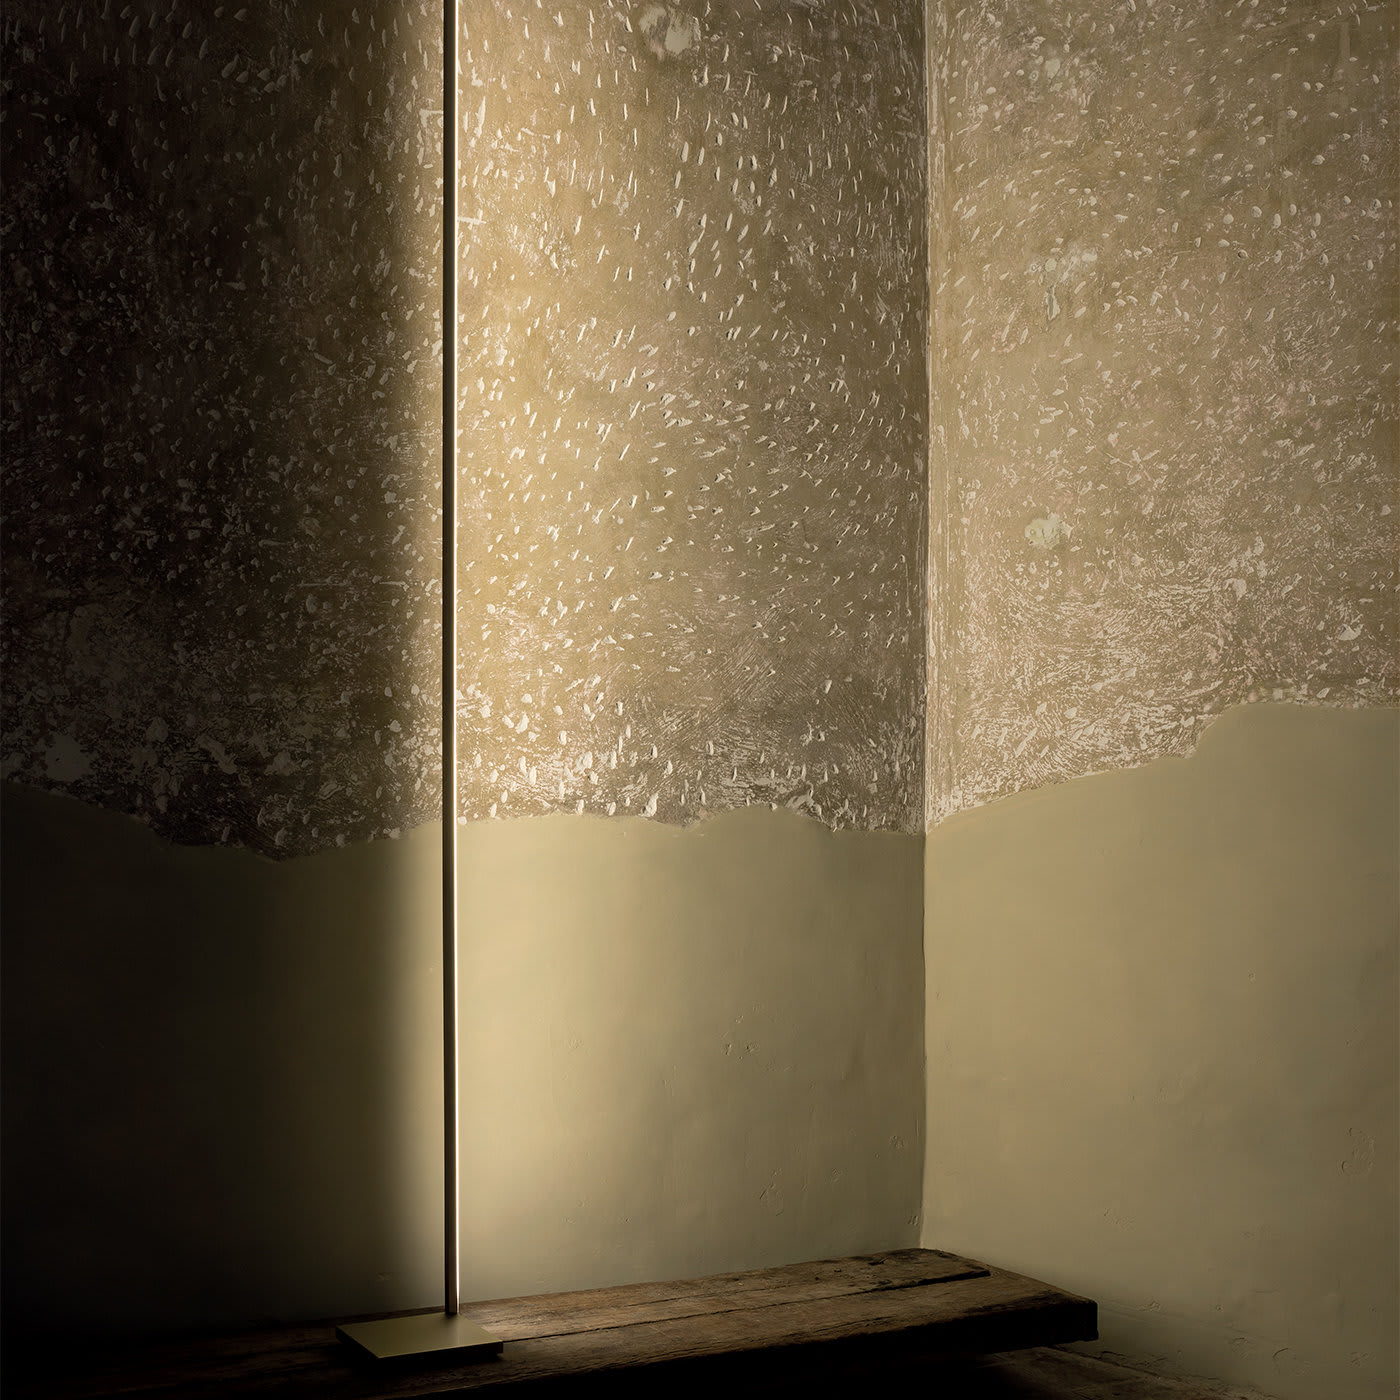 Muta Floor Lamp by Emanuel Gargano - Emanuel Gargano